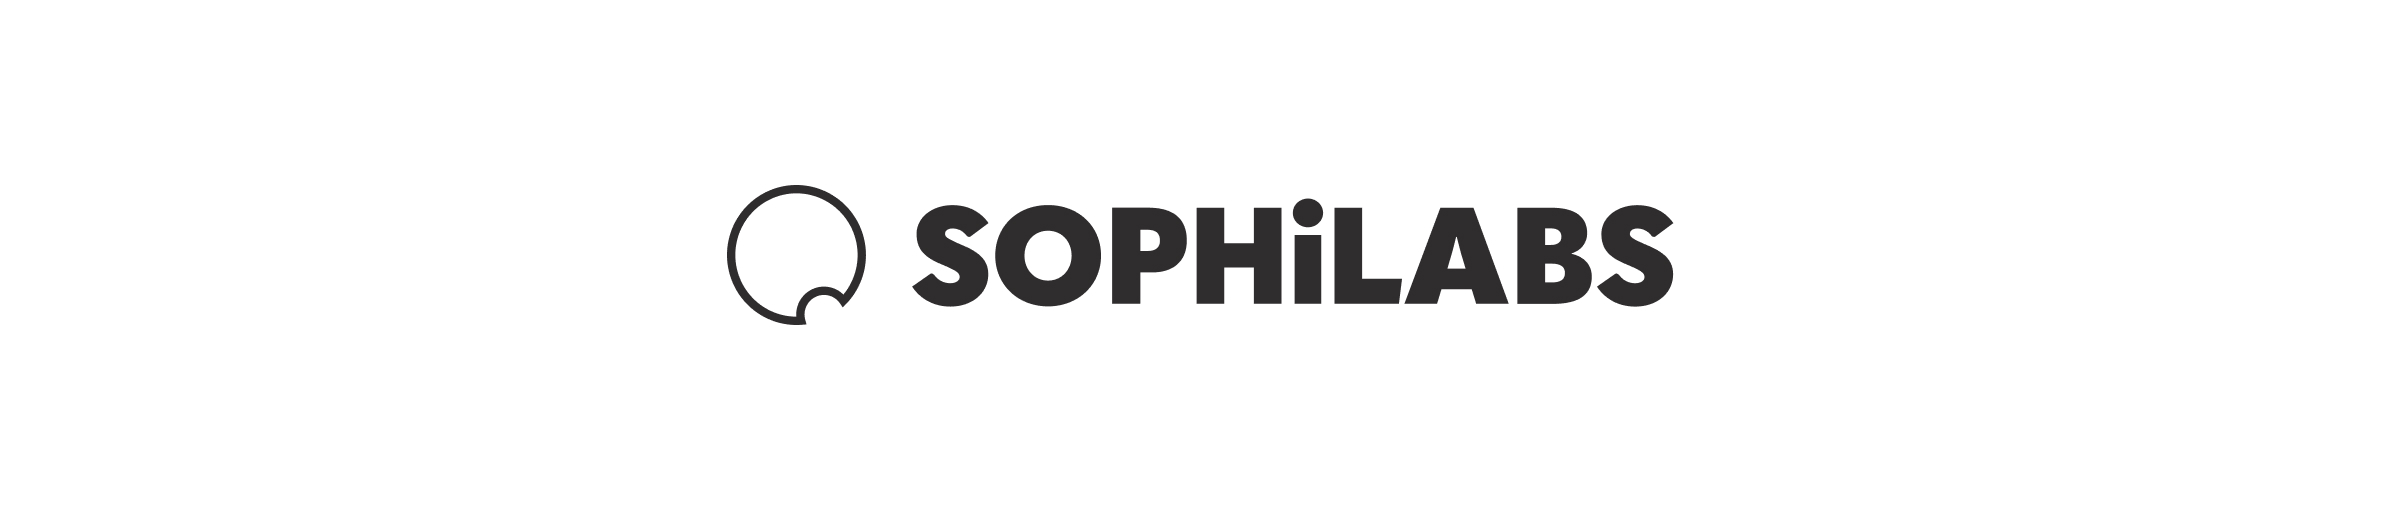 Sophilabs' logo